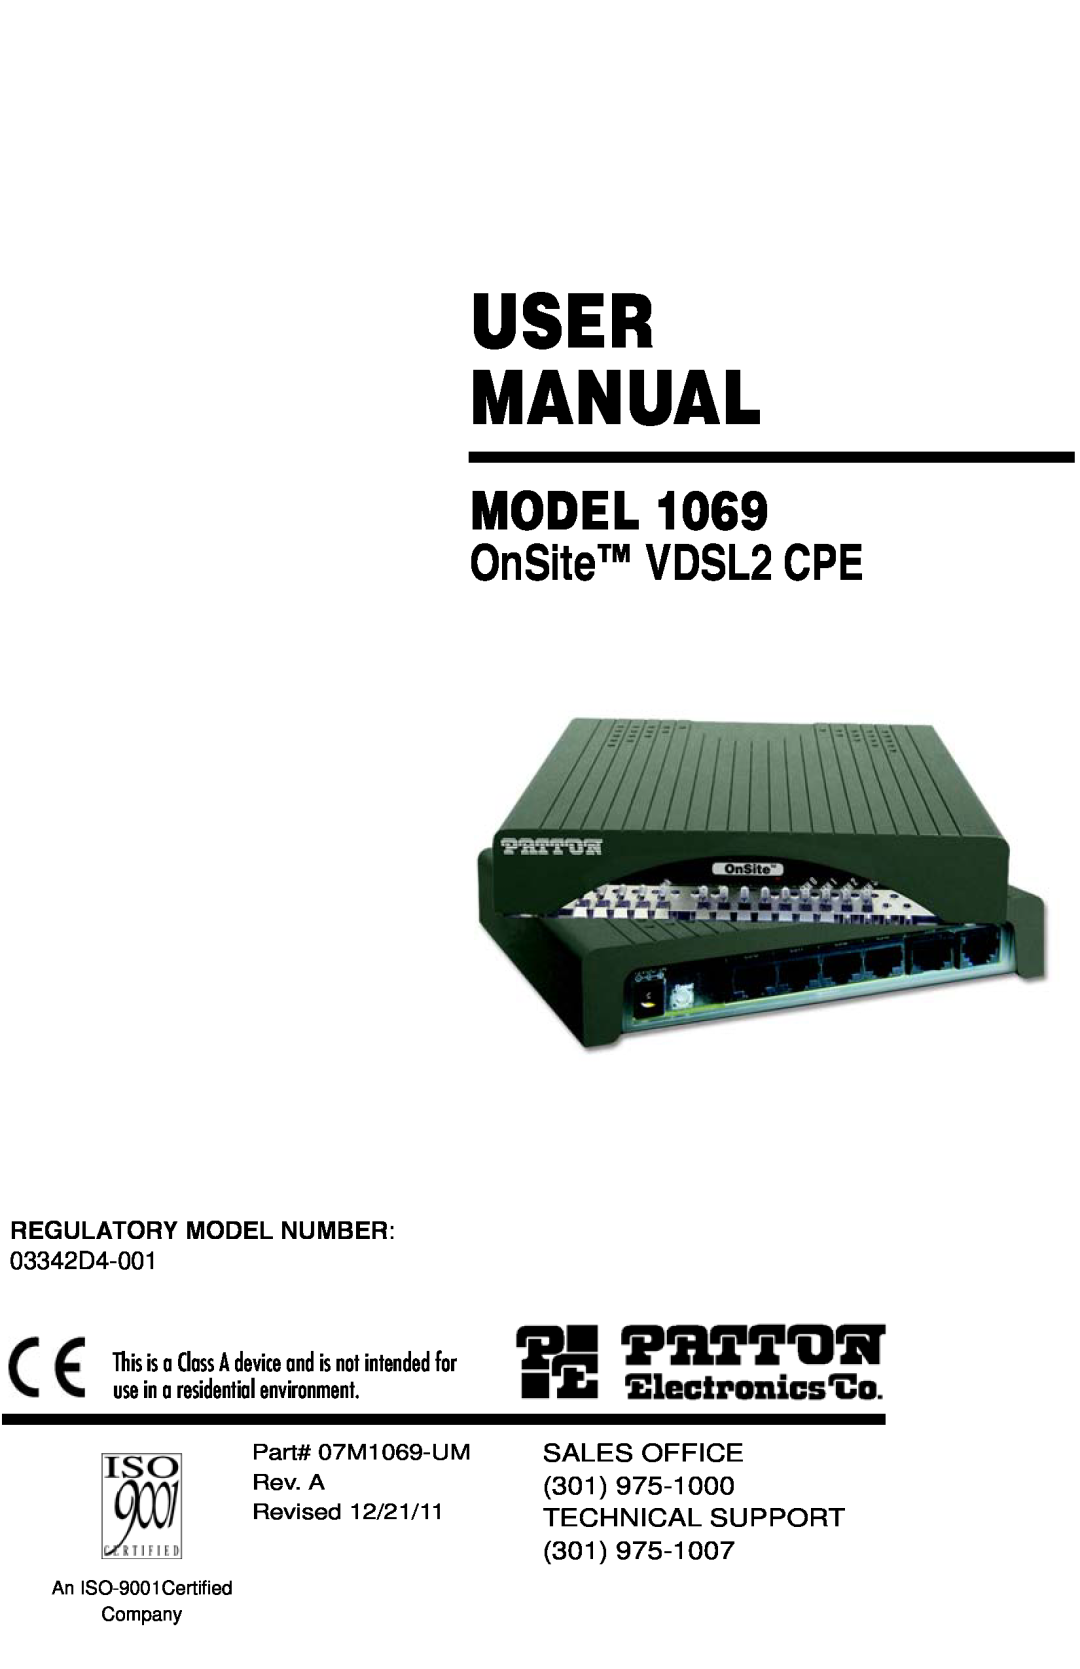 Patton electronic 1069 user manual REGULATORY MODEL NUMBER 03342D4-001, User Manual, Model, OnSite VDSL2 CPE, Rev. A 